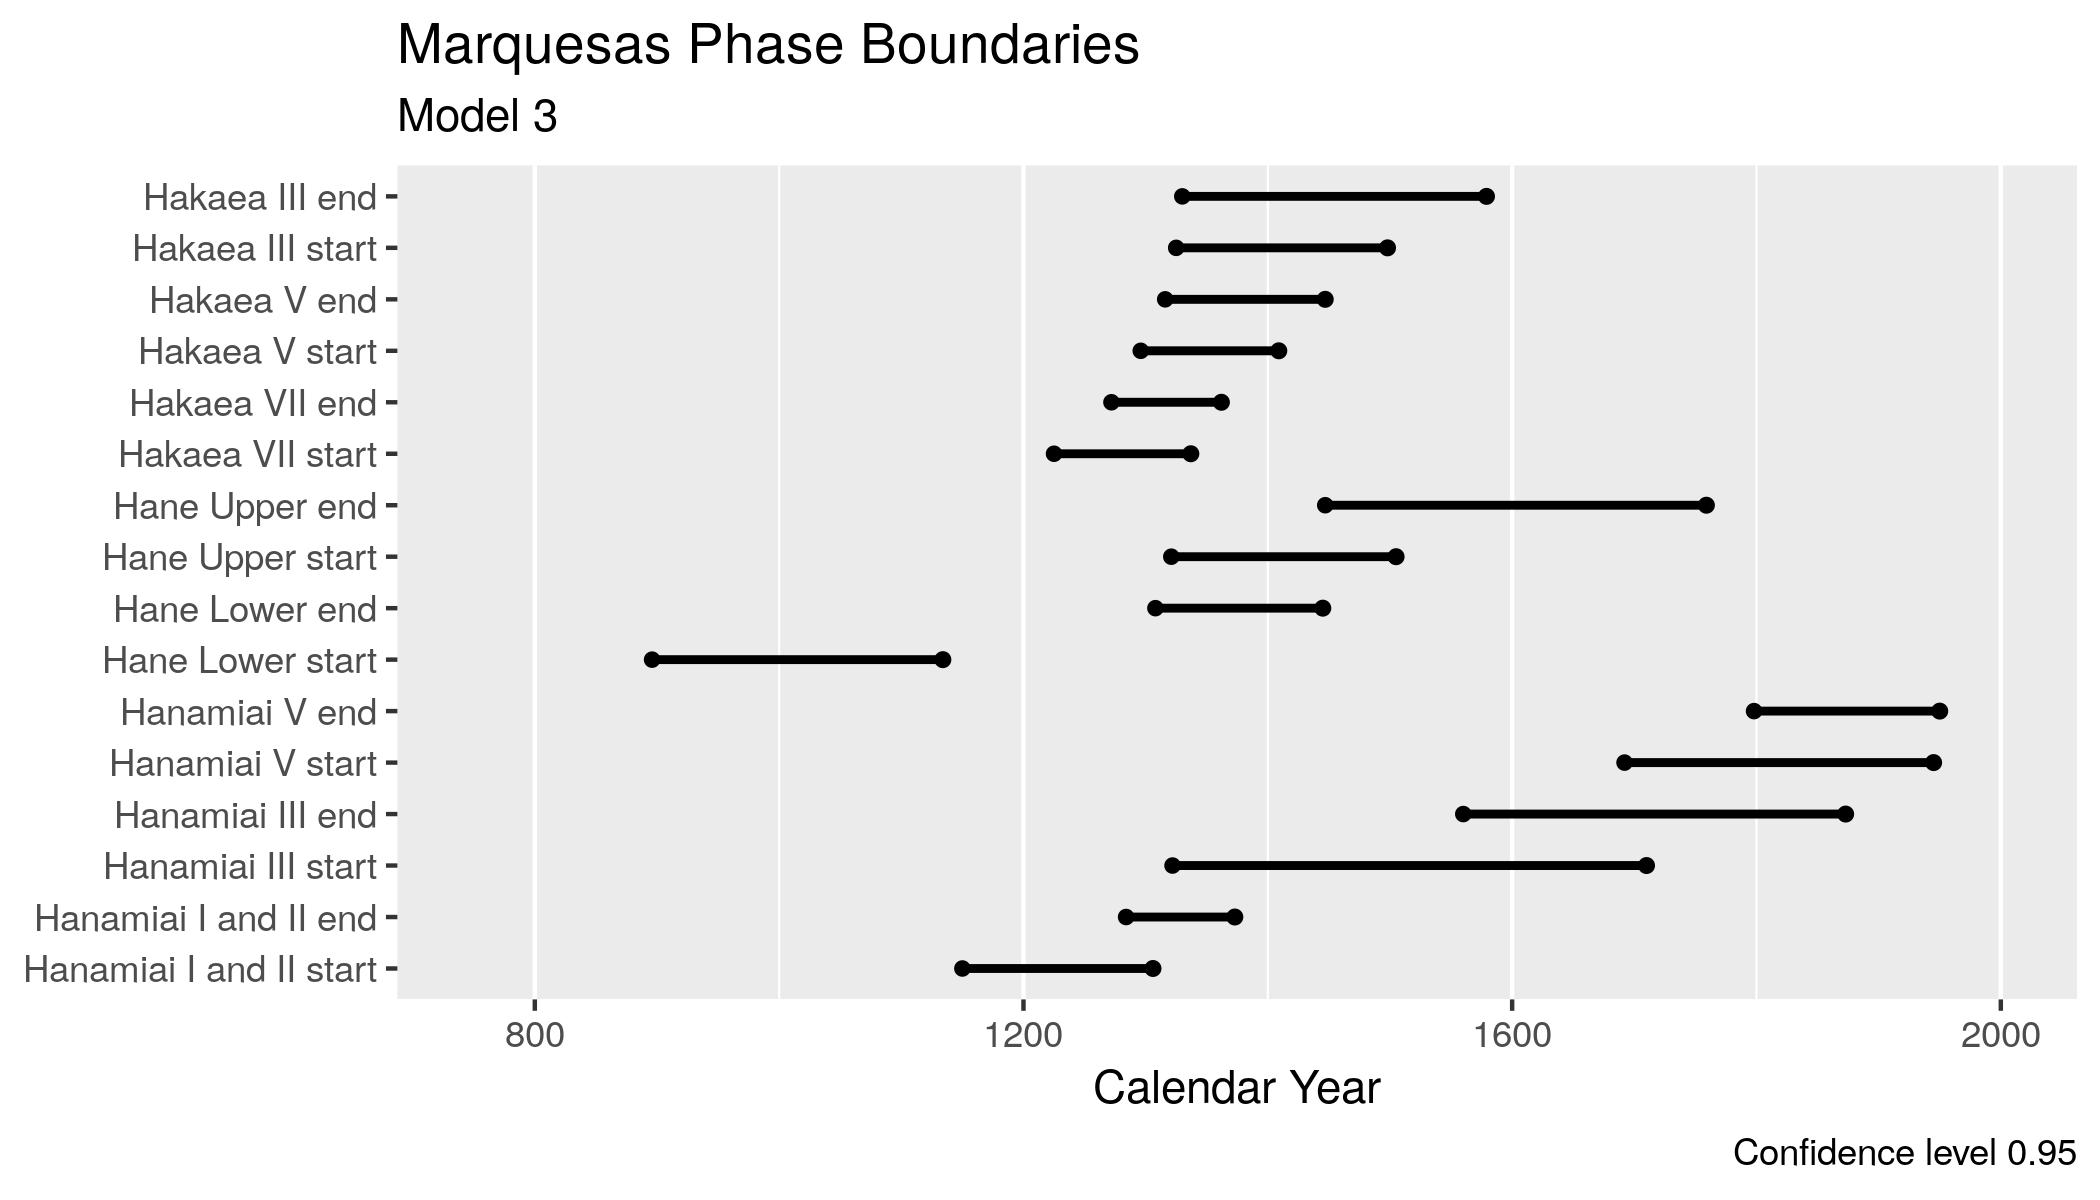 Figure 3: Age estimates for phase boundaries, Marquesas Model 3